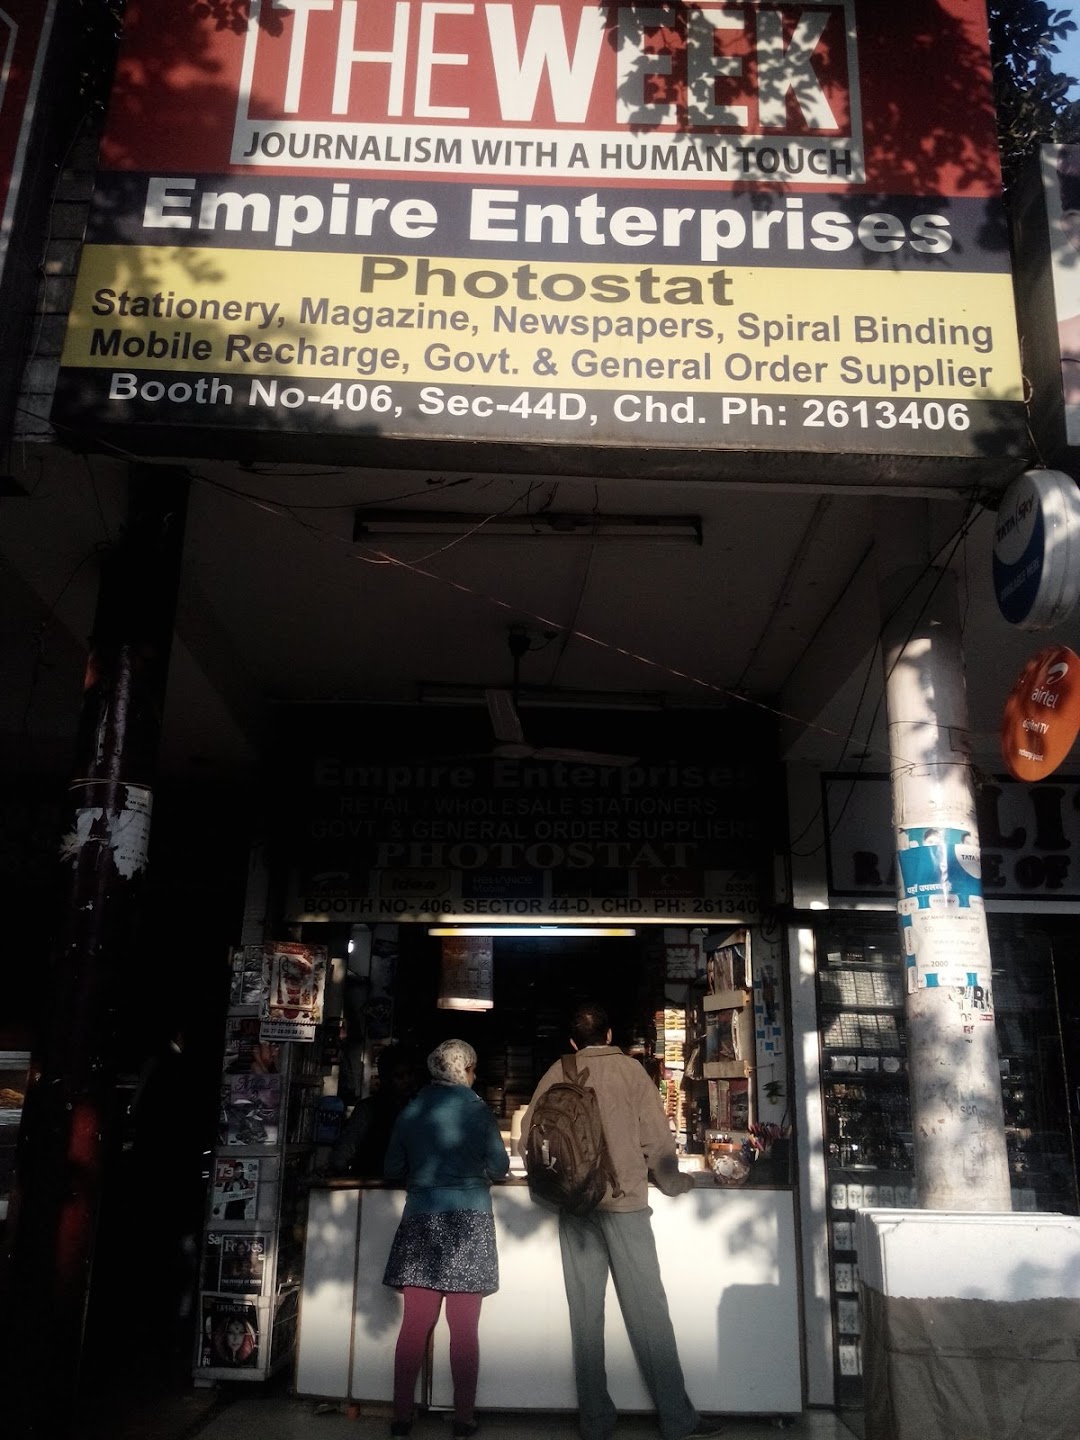 Empire Enterprises